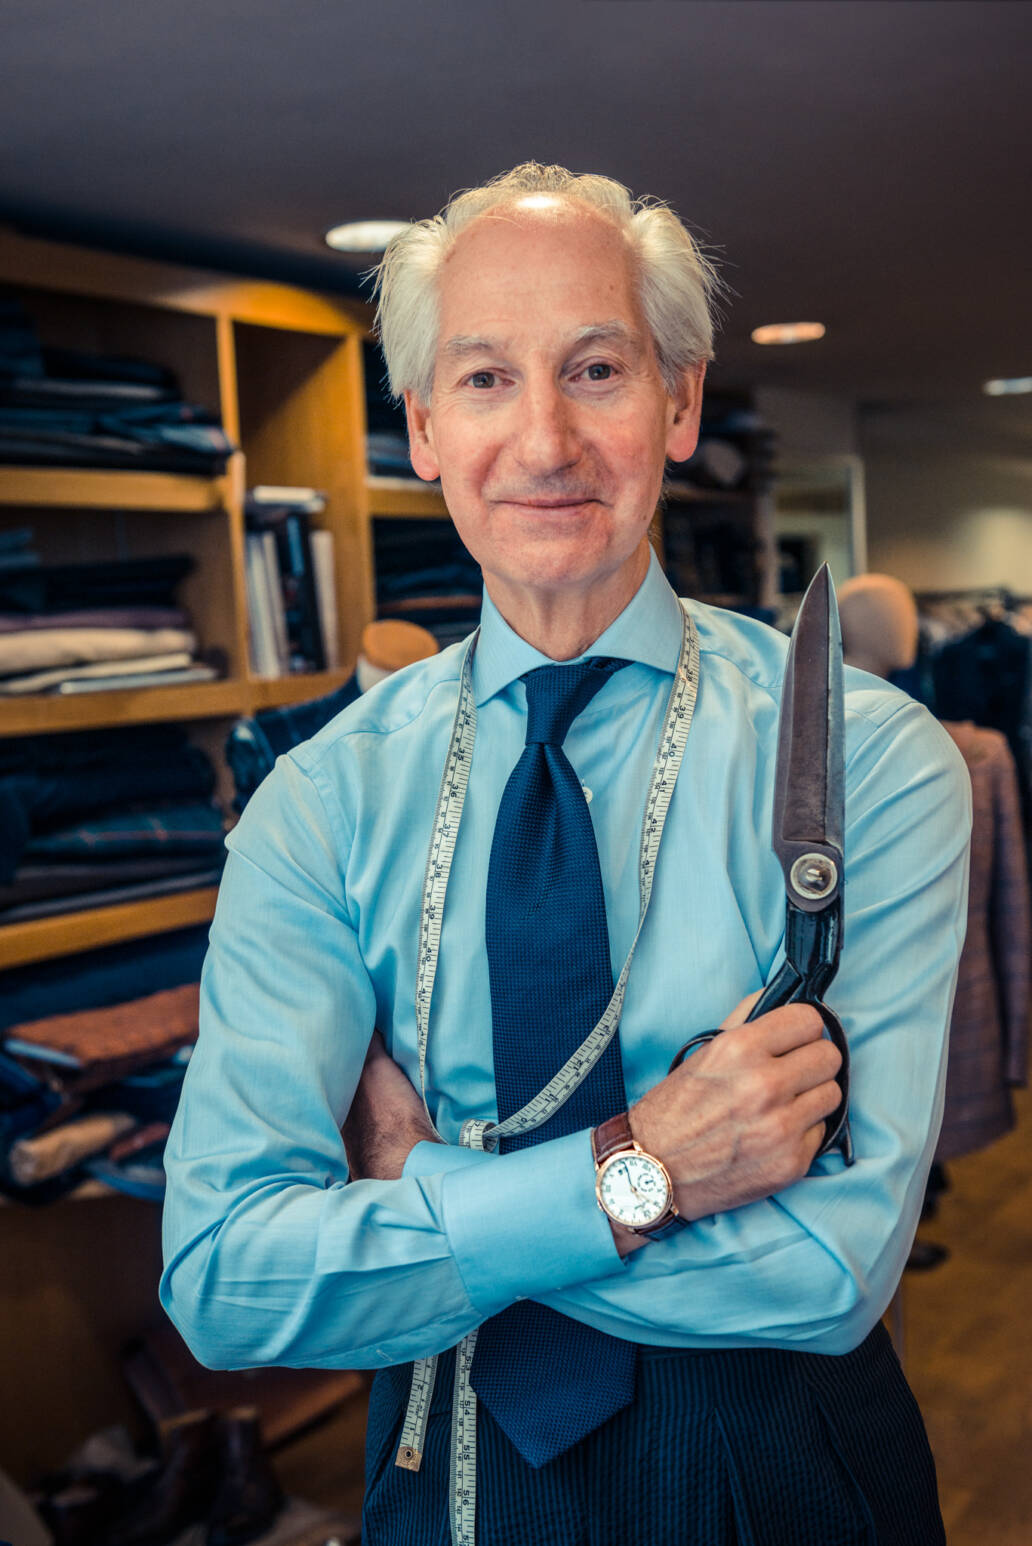 Master Tailor Joe Morgan, co-founder Savile Row tailor Chittleborough & Morgan